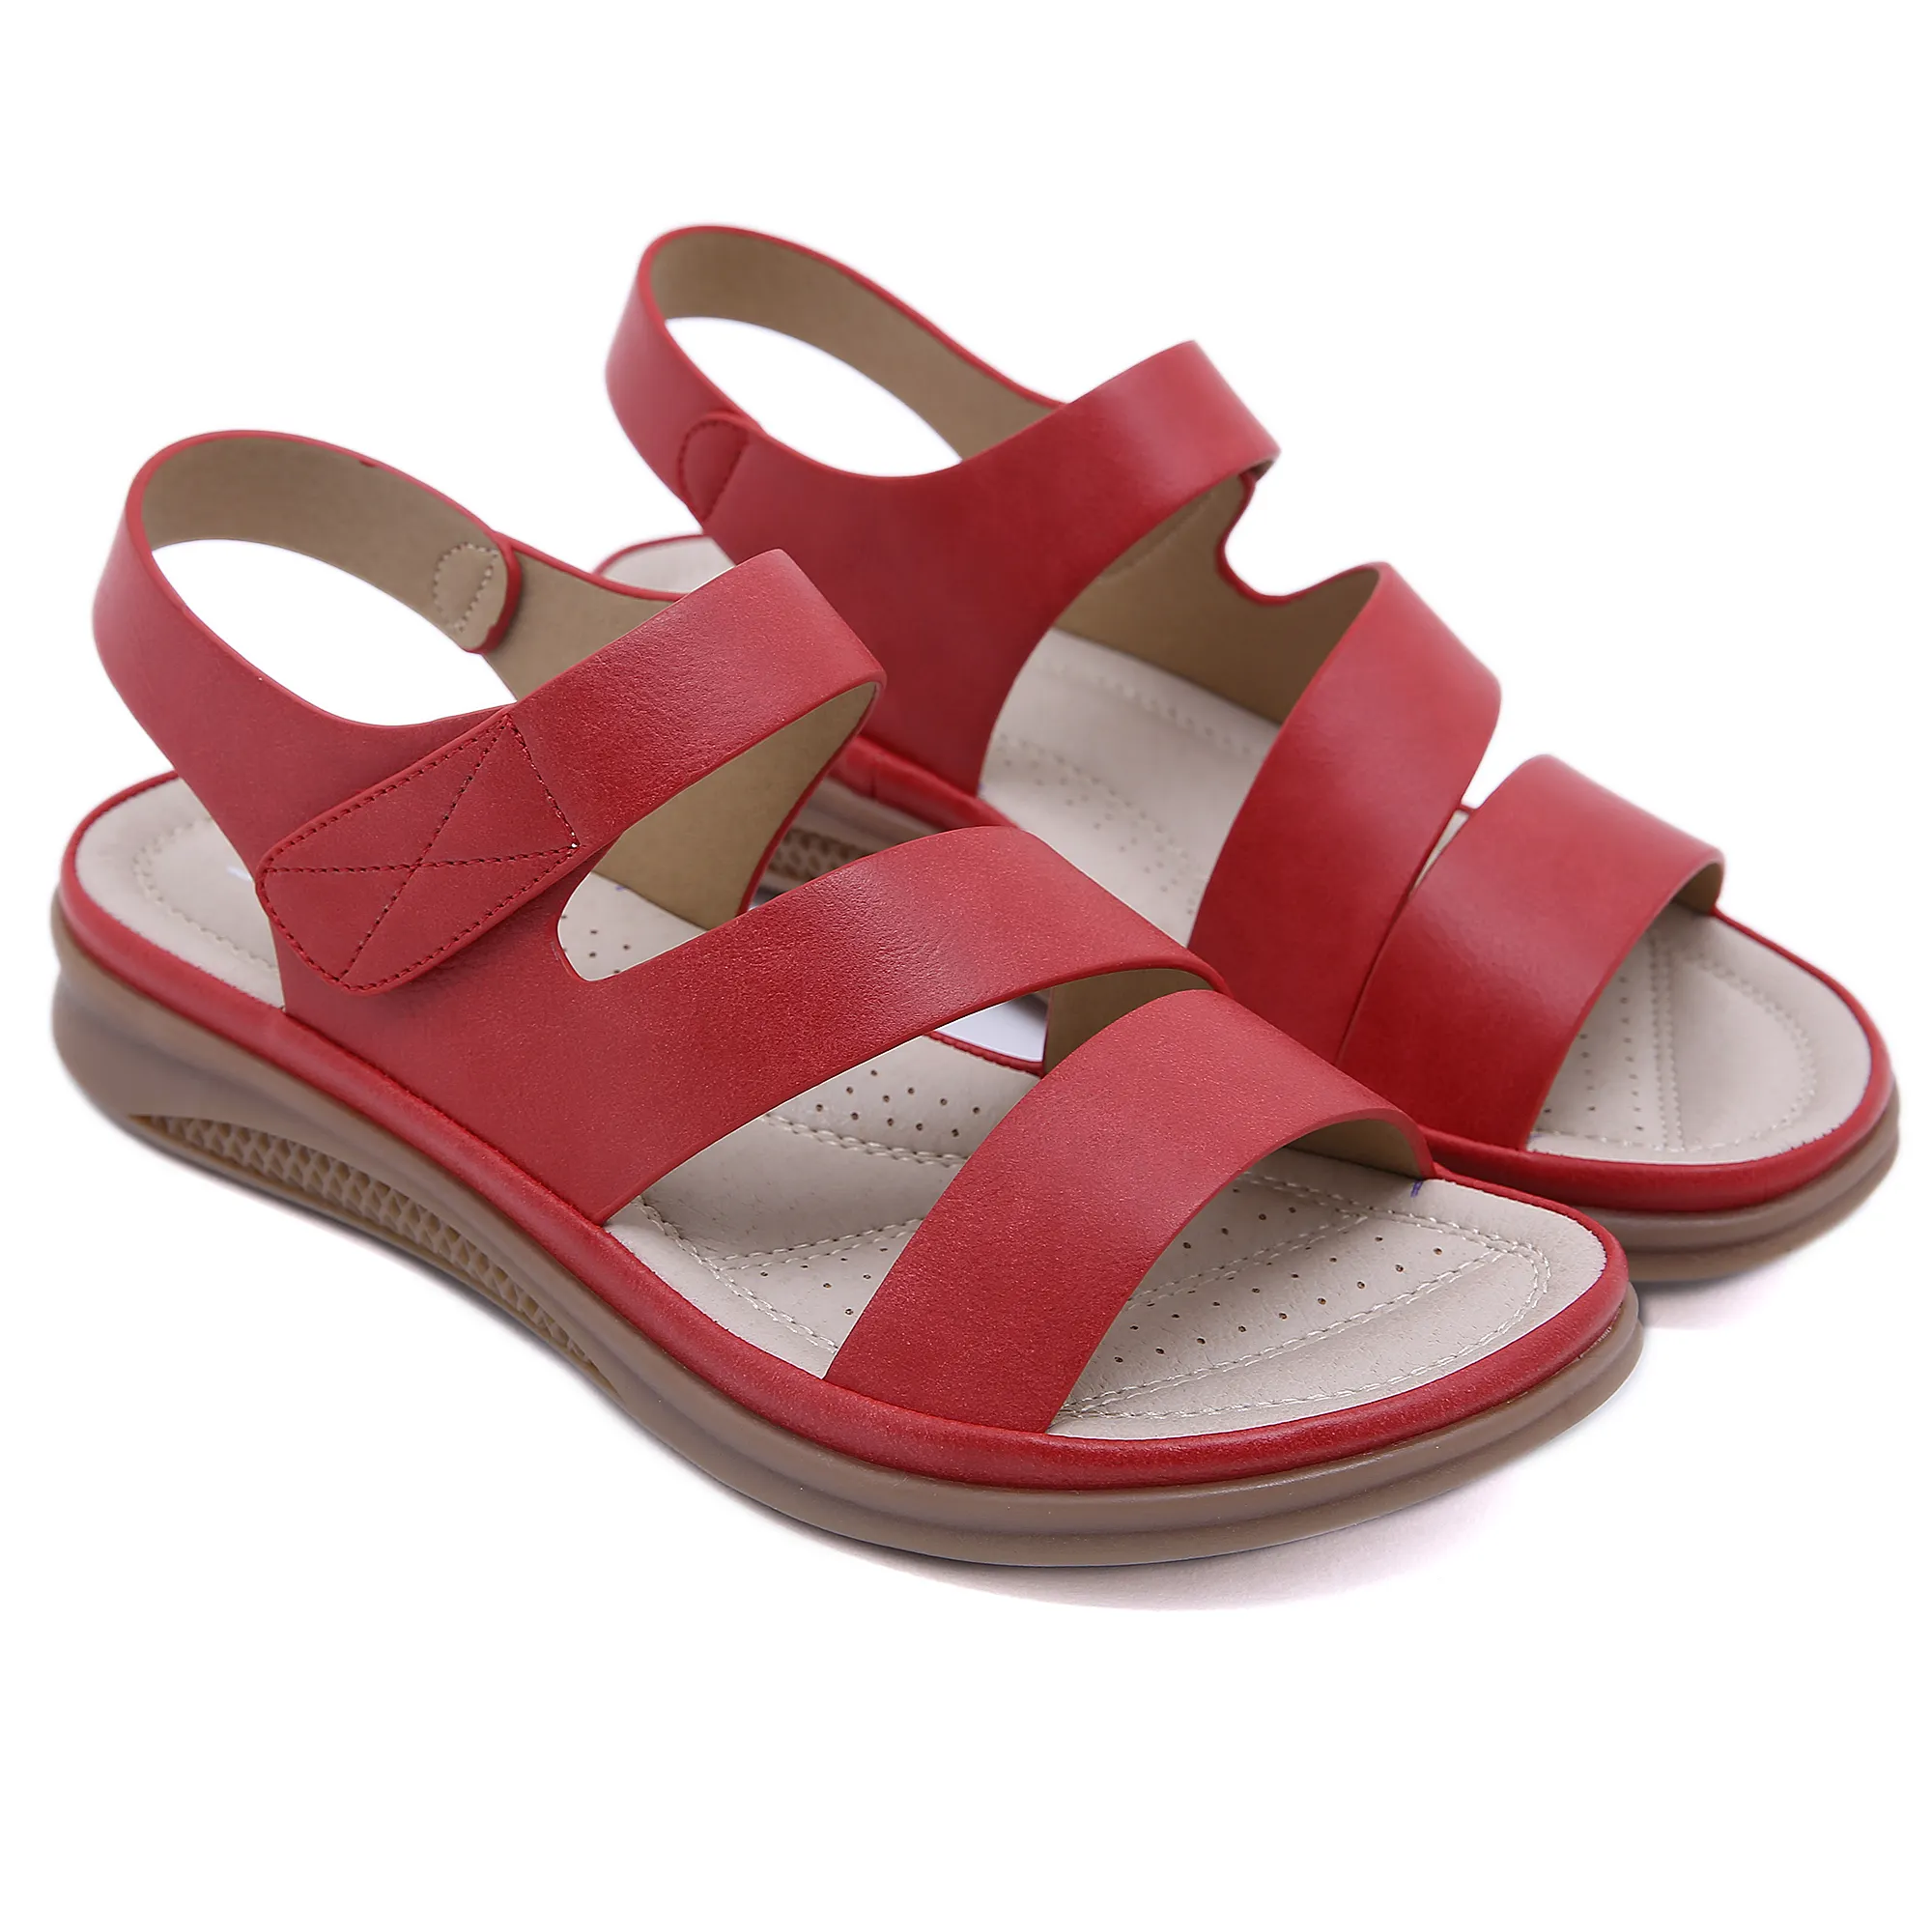 Fashion Summer Wedges Women Sandals Open Toe Sandal Ladies Platform Wedges Sandals High Heels Shoes